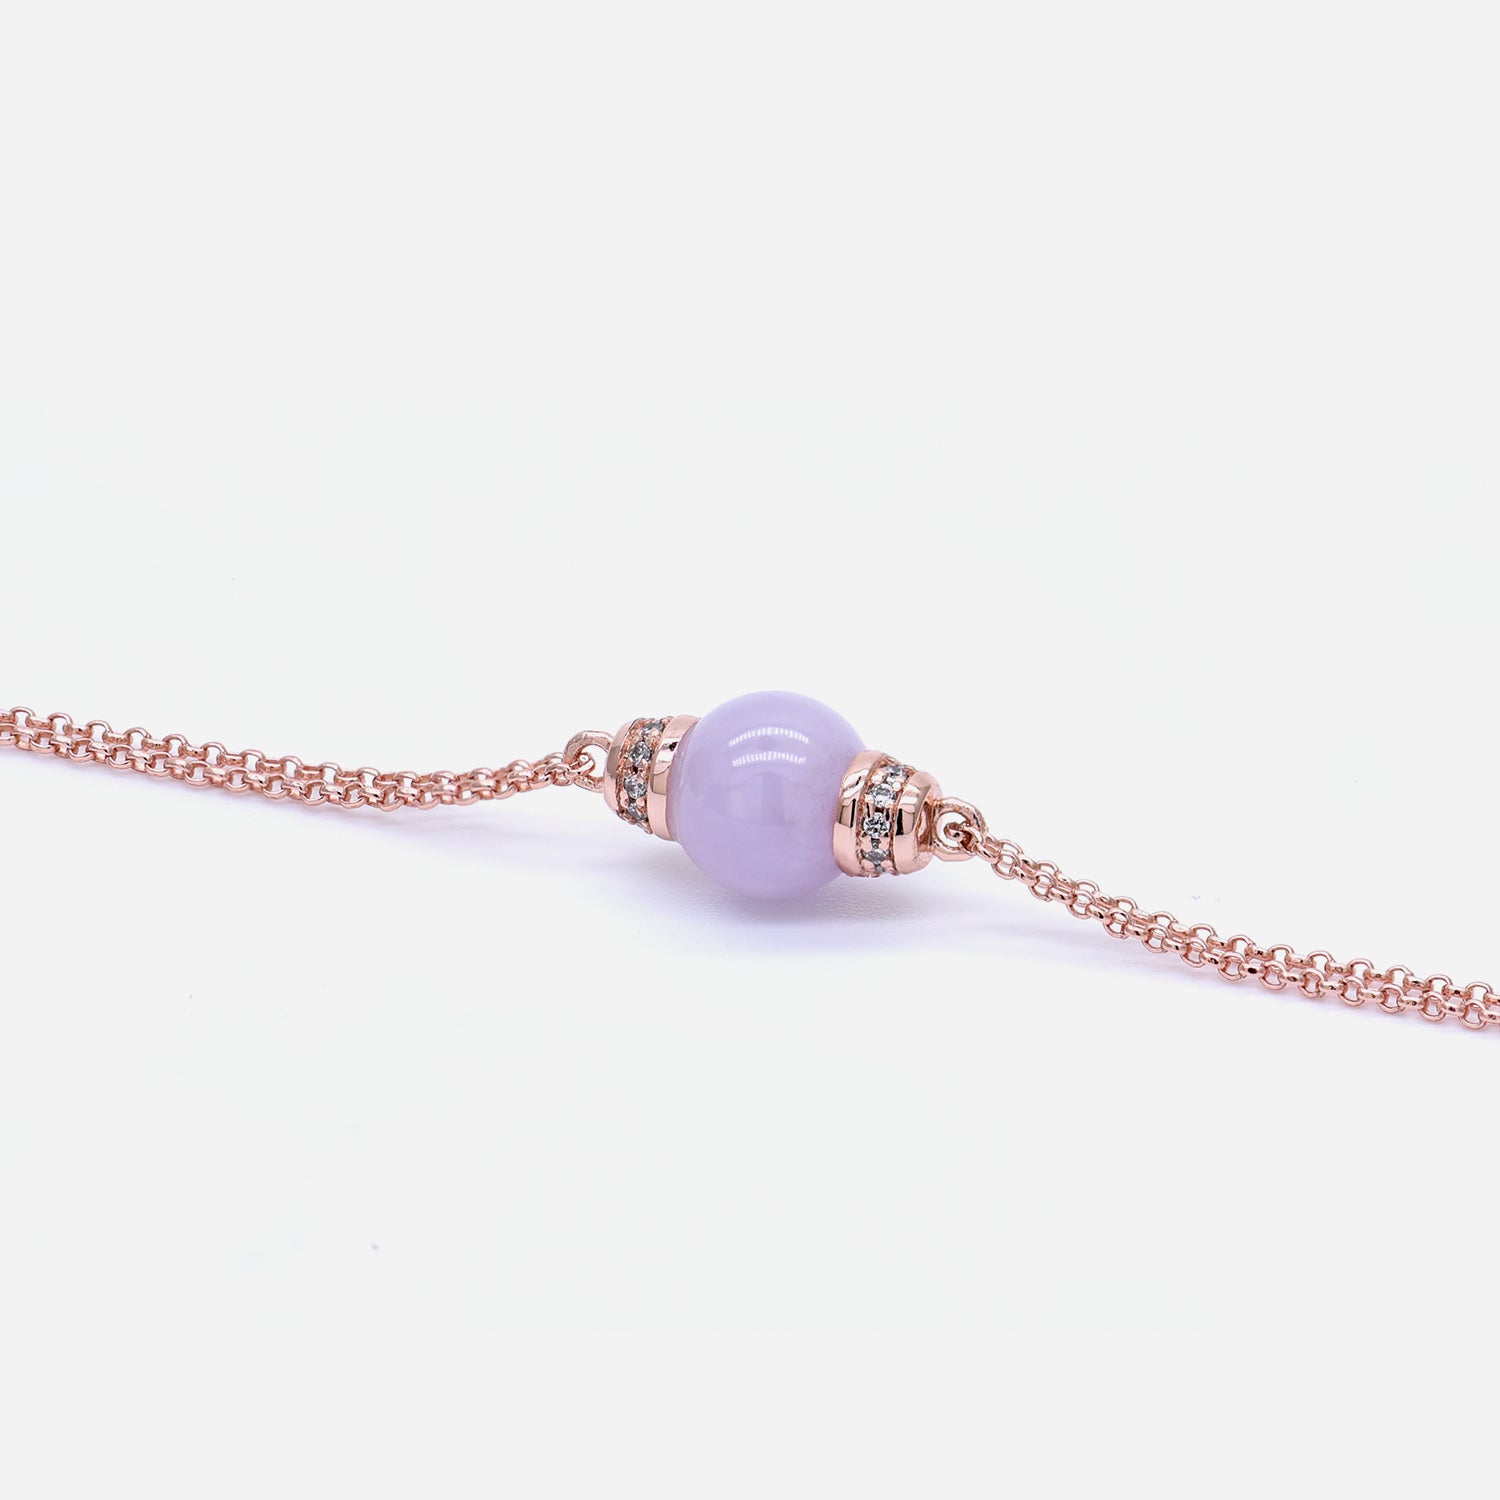 EDEN 悅 Bracelet in Lavender Jade